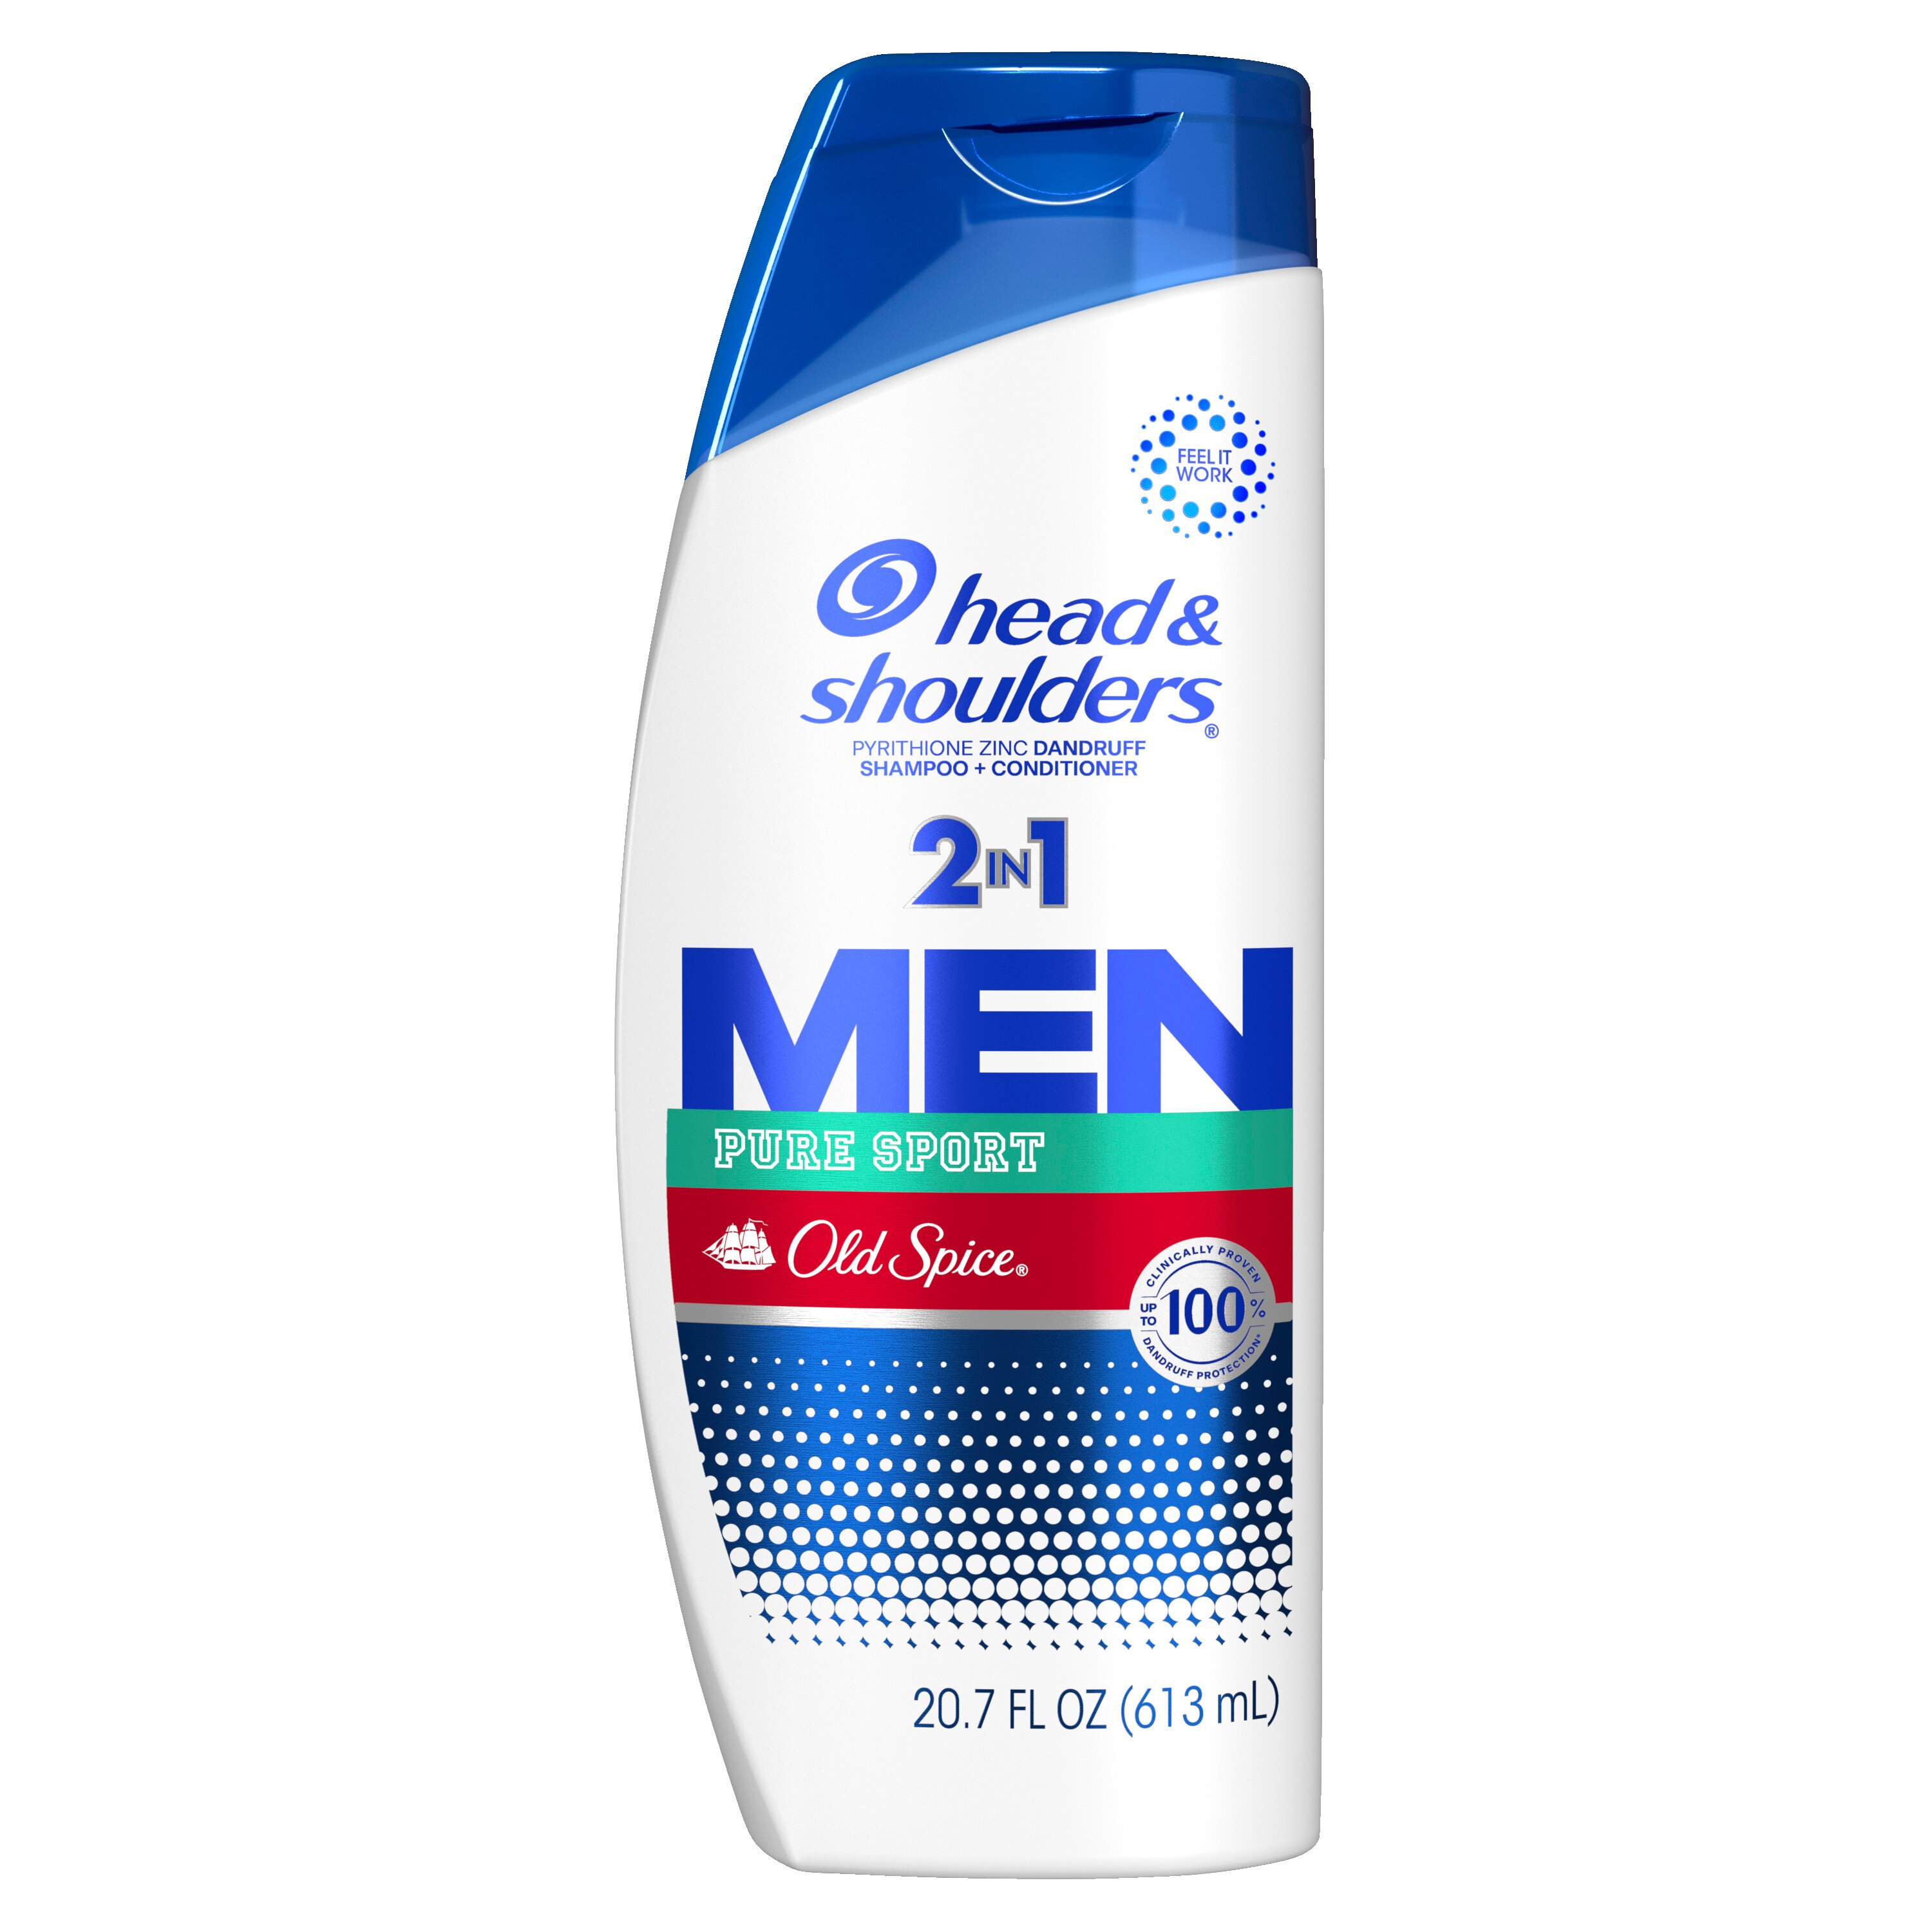 Head & Shoulders Old Spice 2-in-1 Dandruff Shampoo + Conditioner for Men, 23.7 OZ